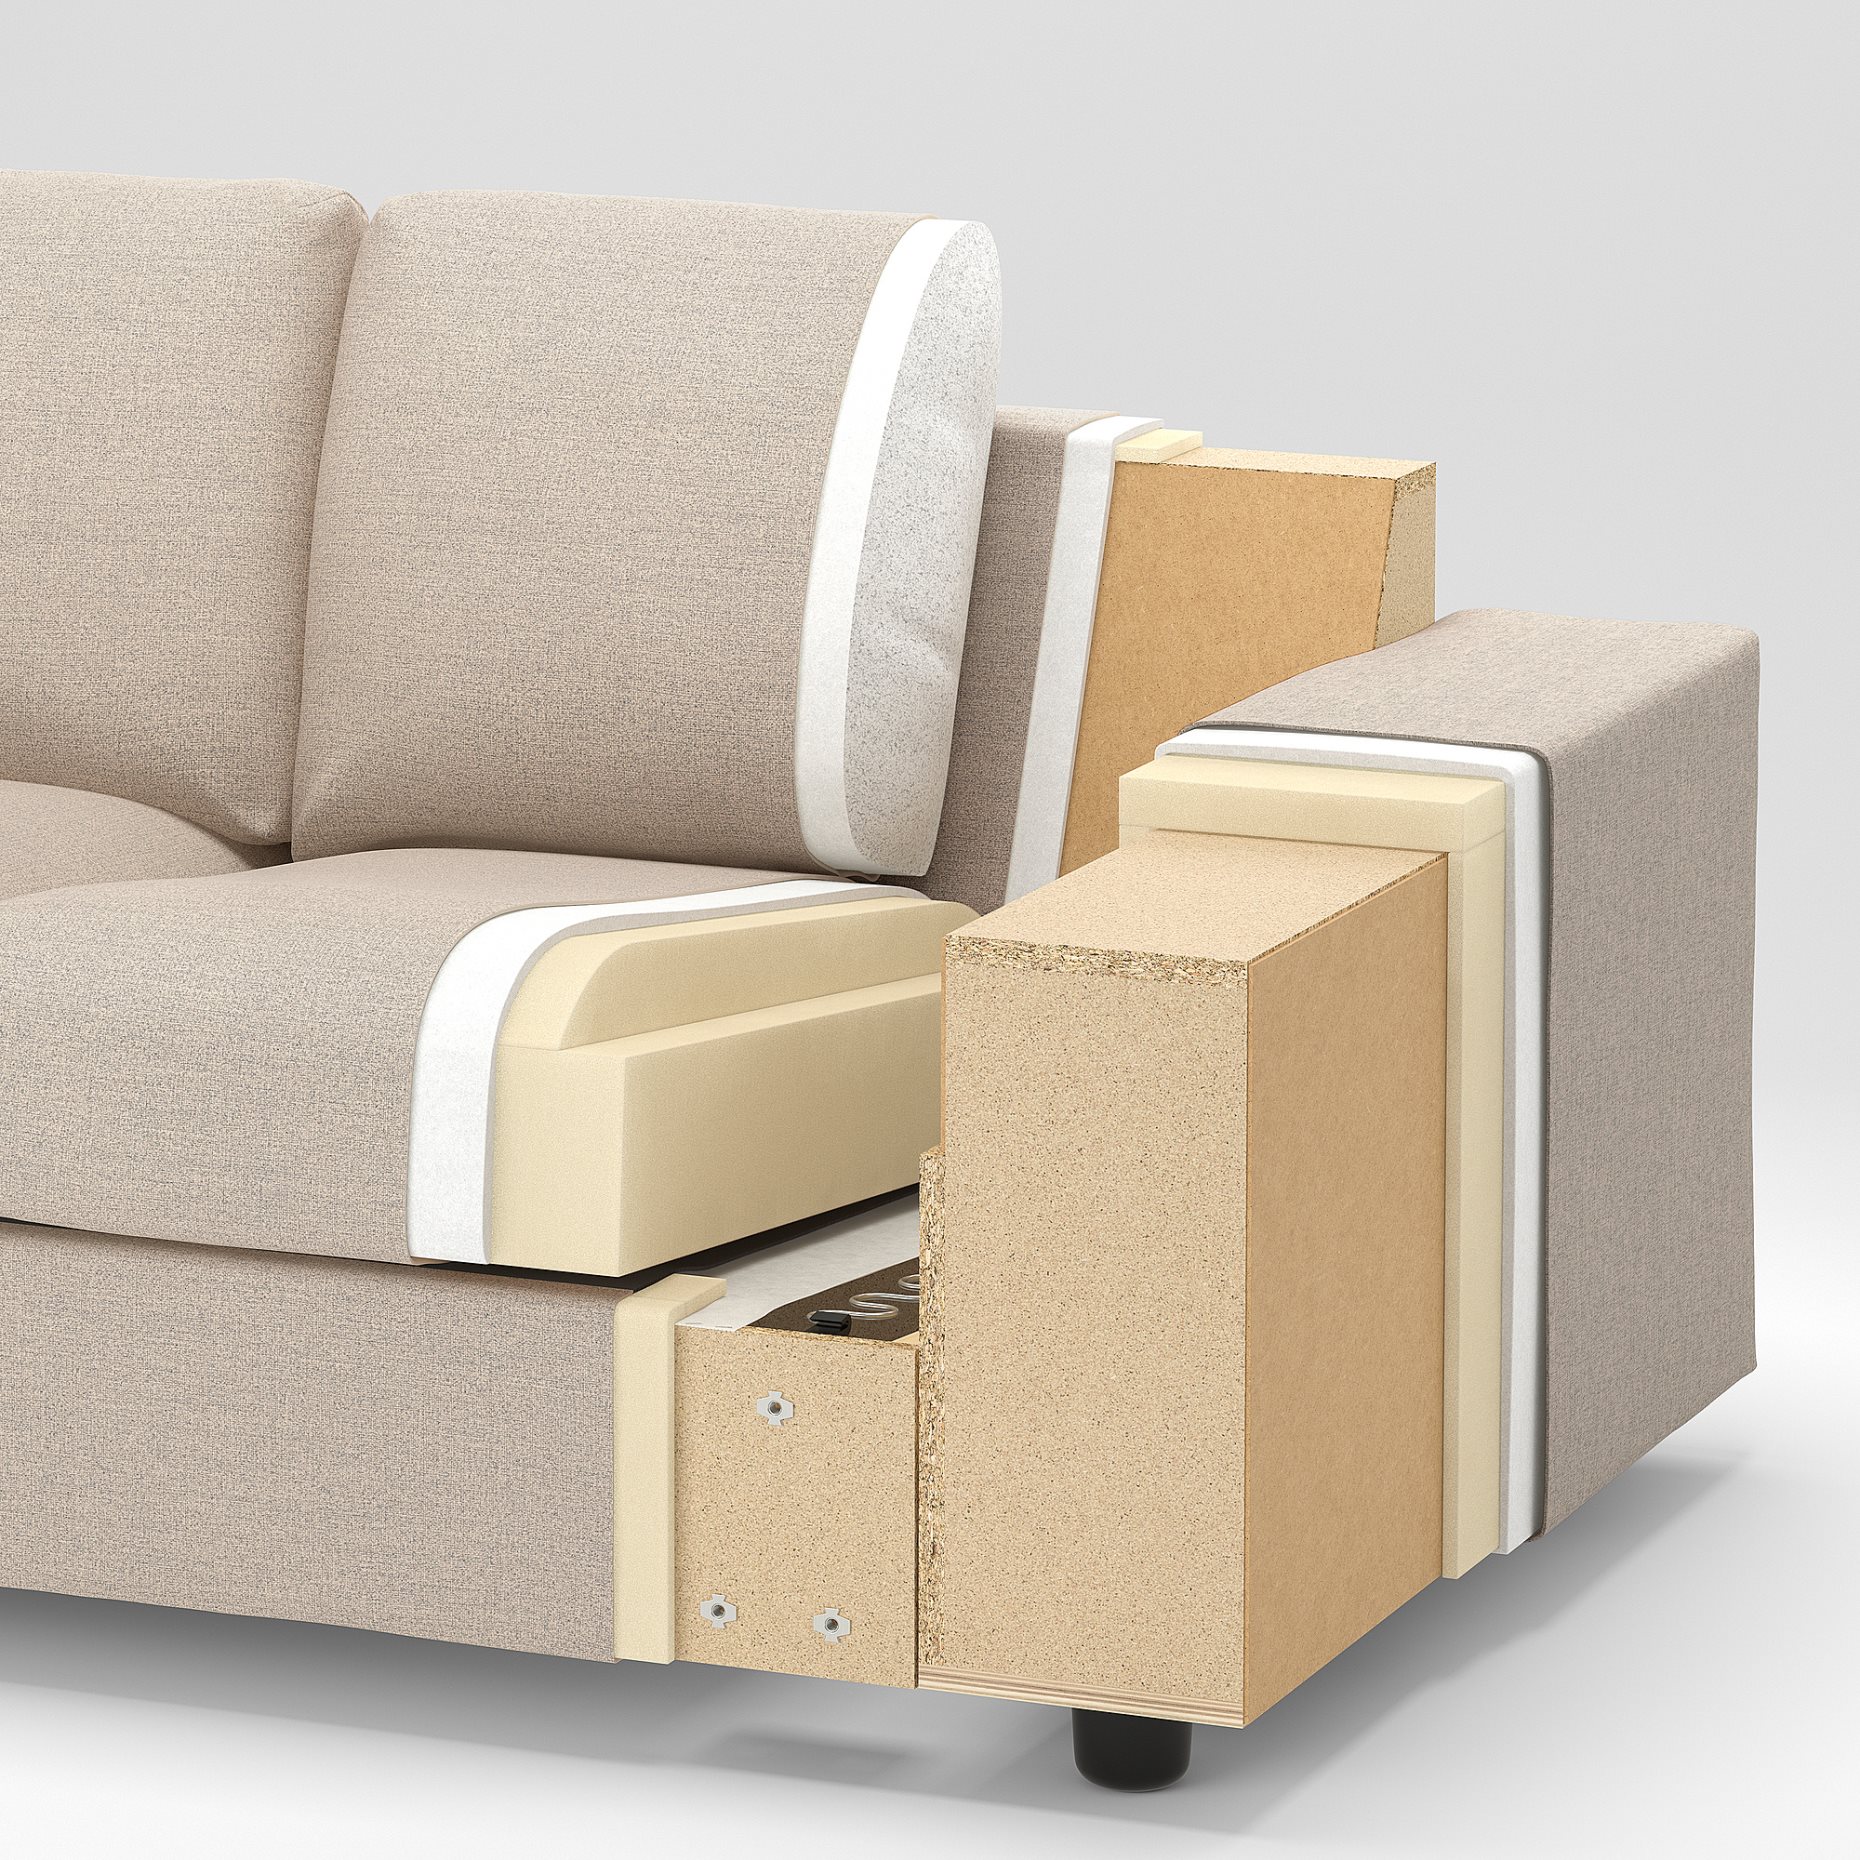 VIMLE, 3-seat sofa, 594.014.30